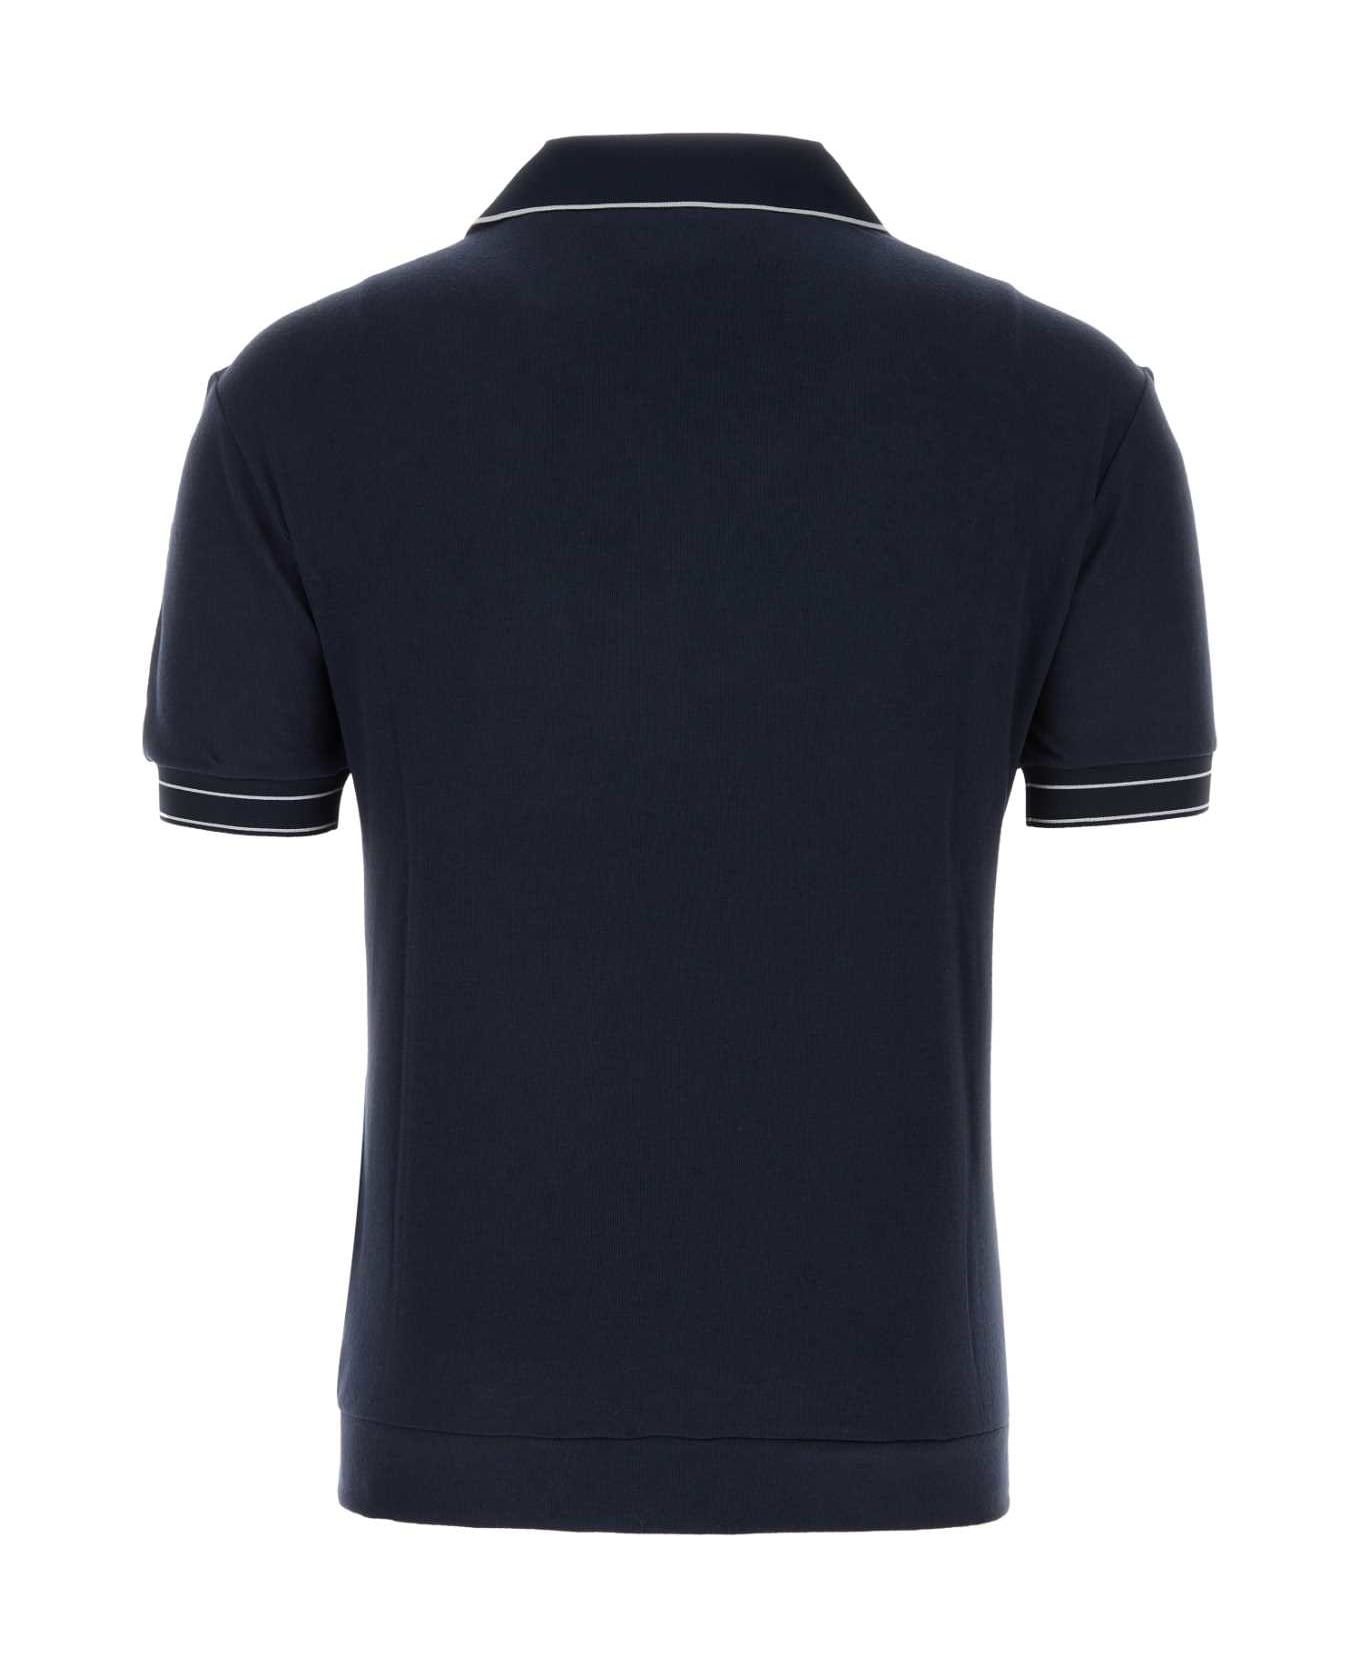 Giorgio Armani Midnight Bue Viscose Blend Polo Shirt - NAVY